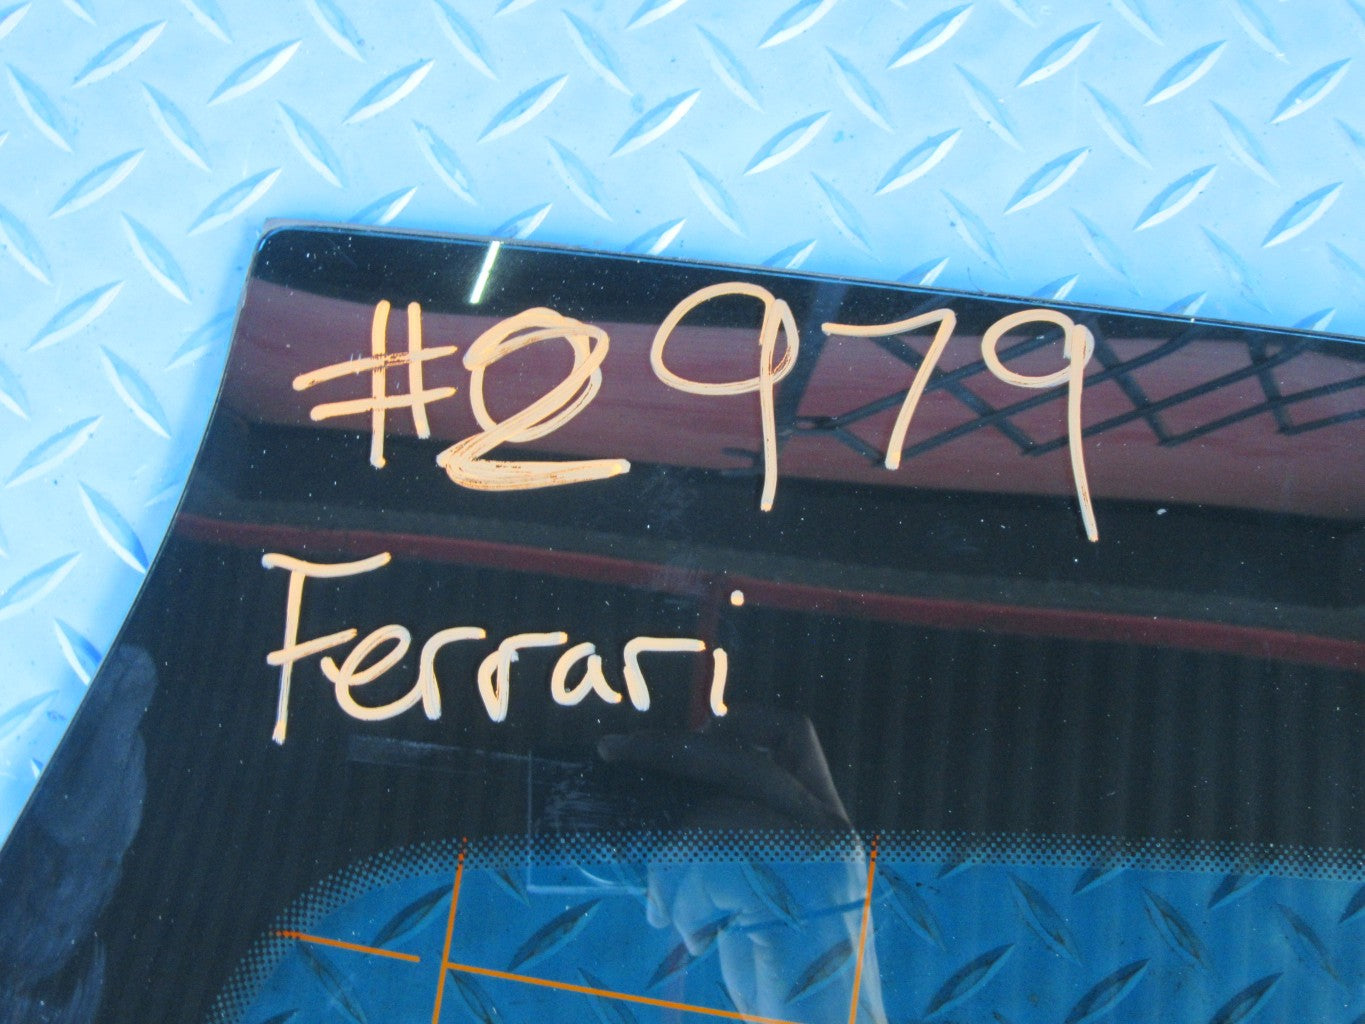 Ferrari 812 Superfast rear back engine glass #2979